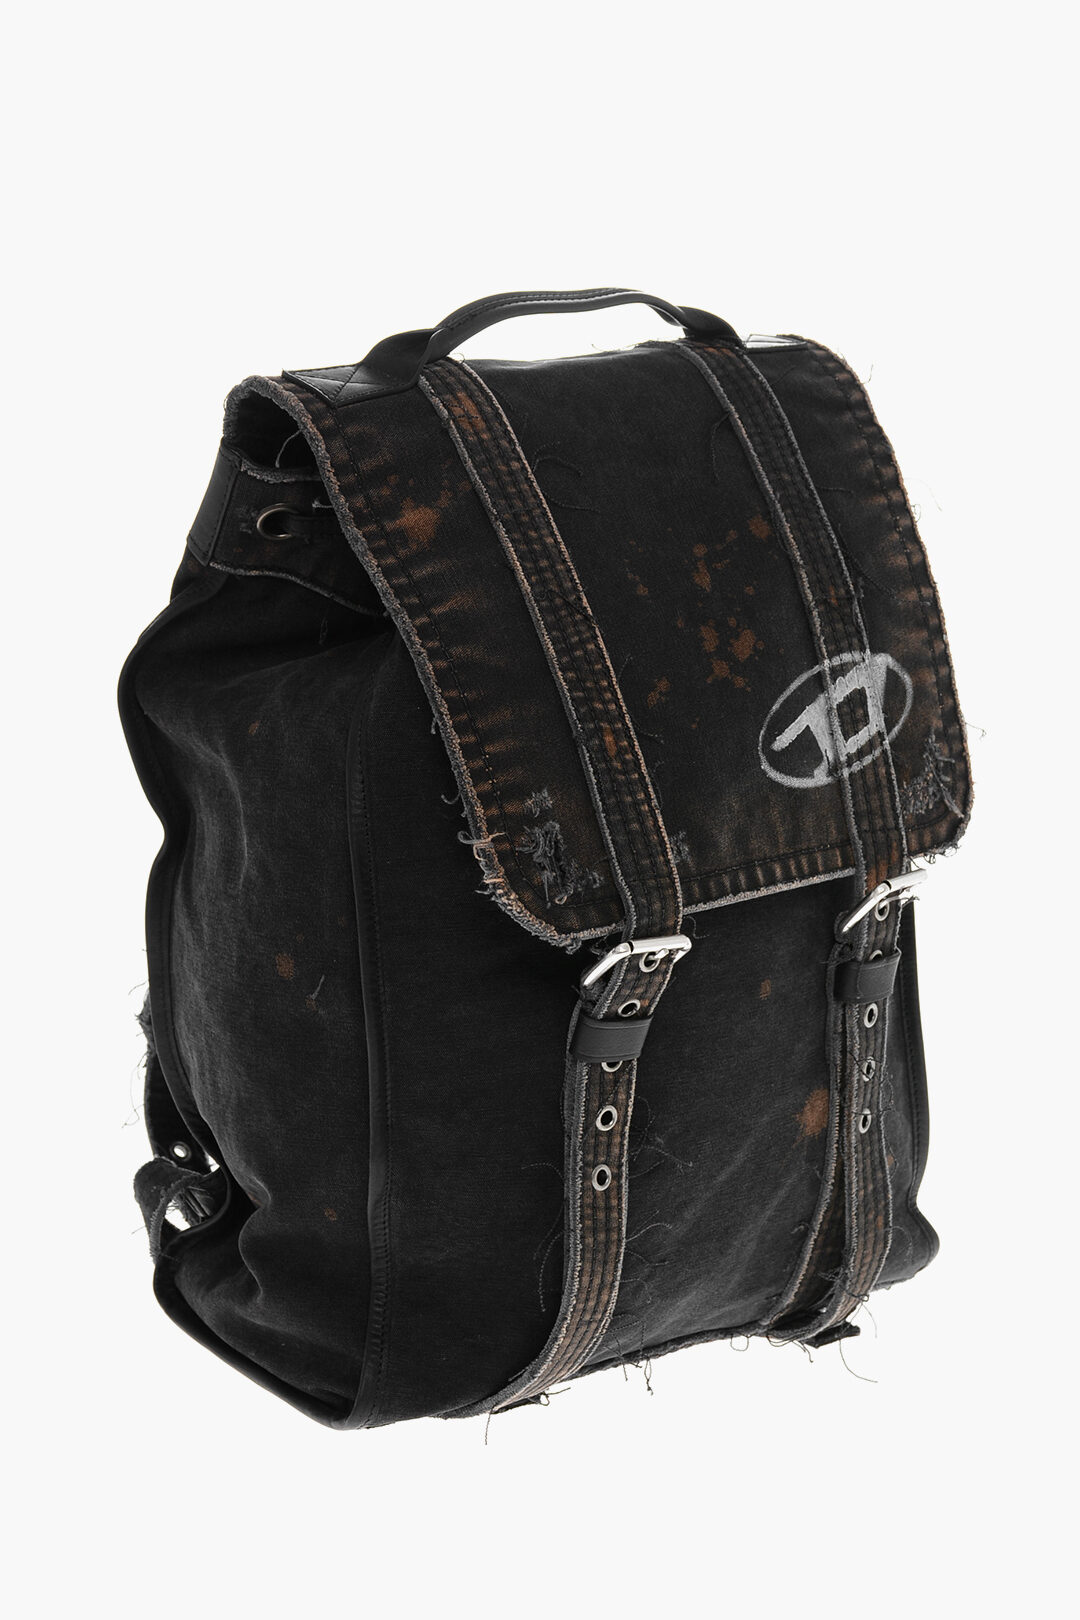 diesel Vintage Spare Parts backpack leather men Gray And Black